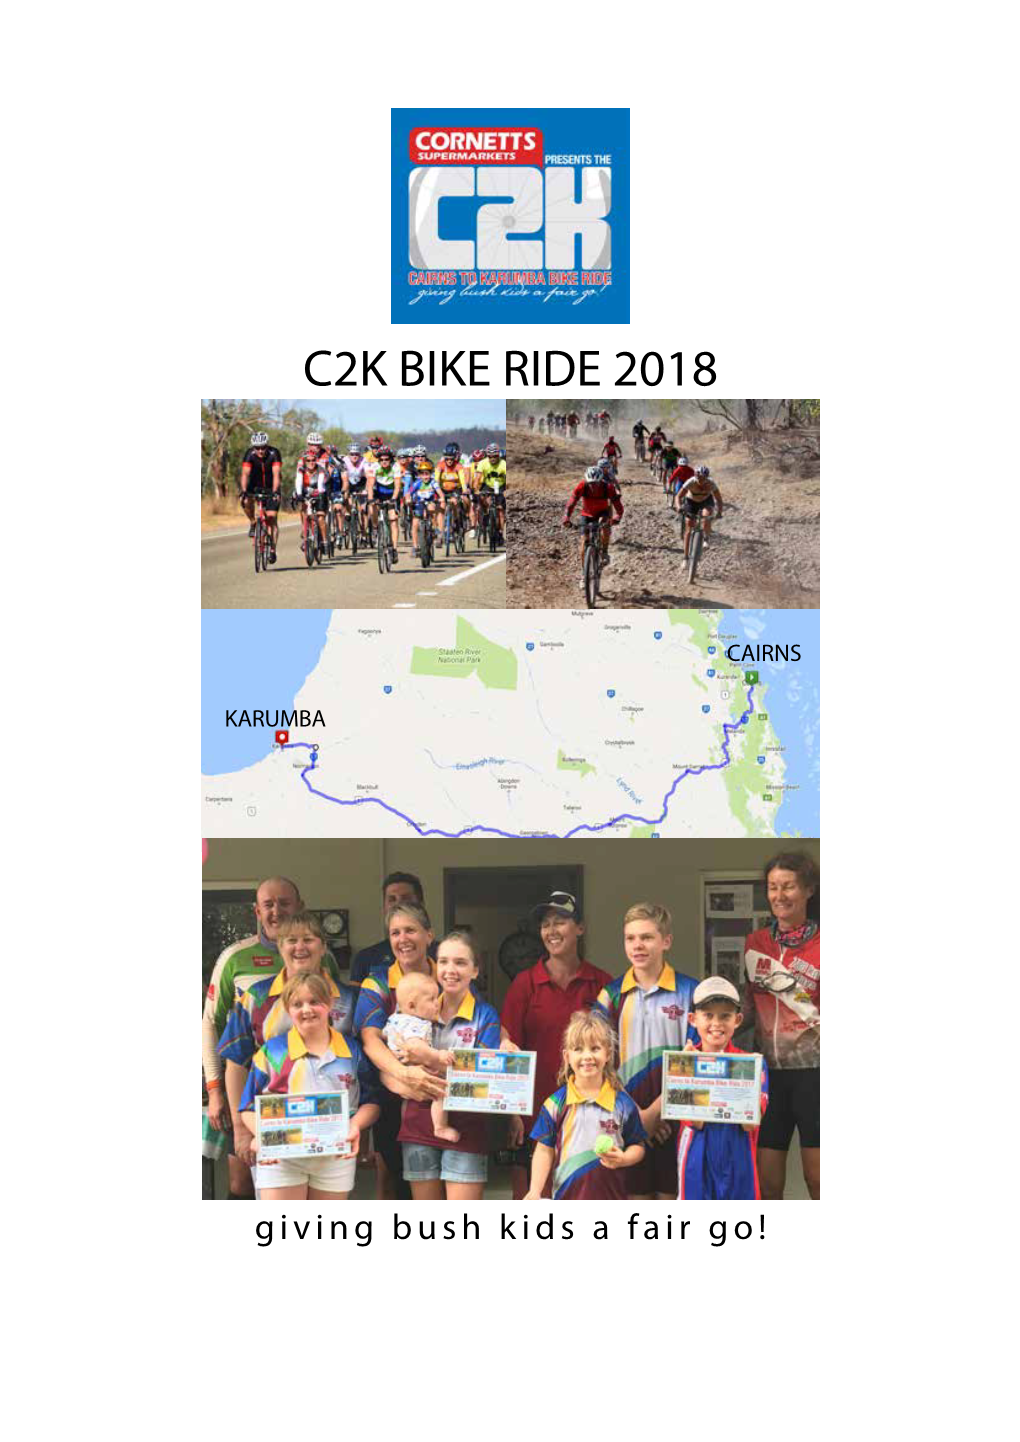 C2k Bike Ride 2018